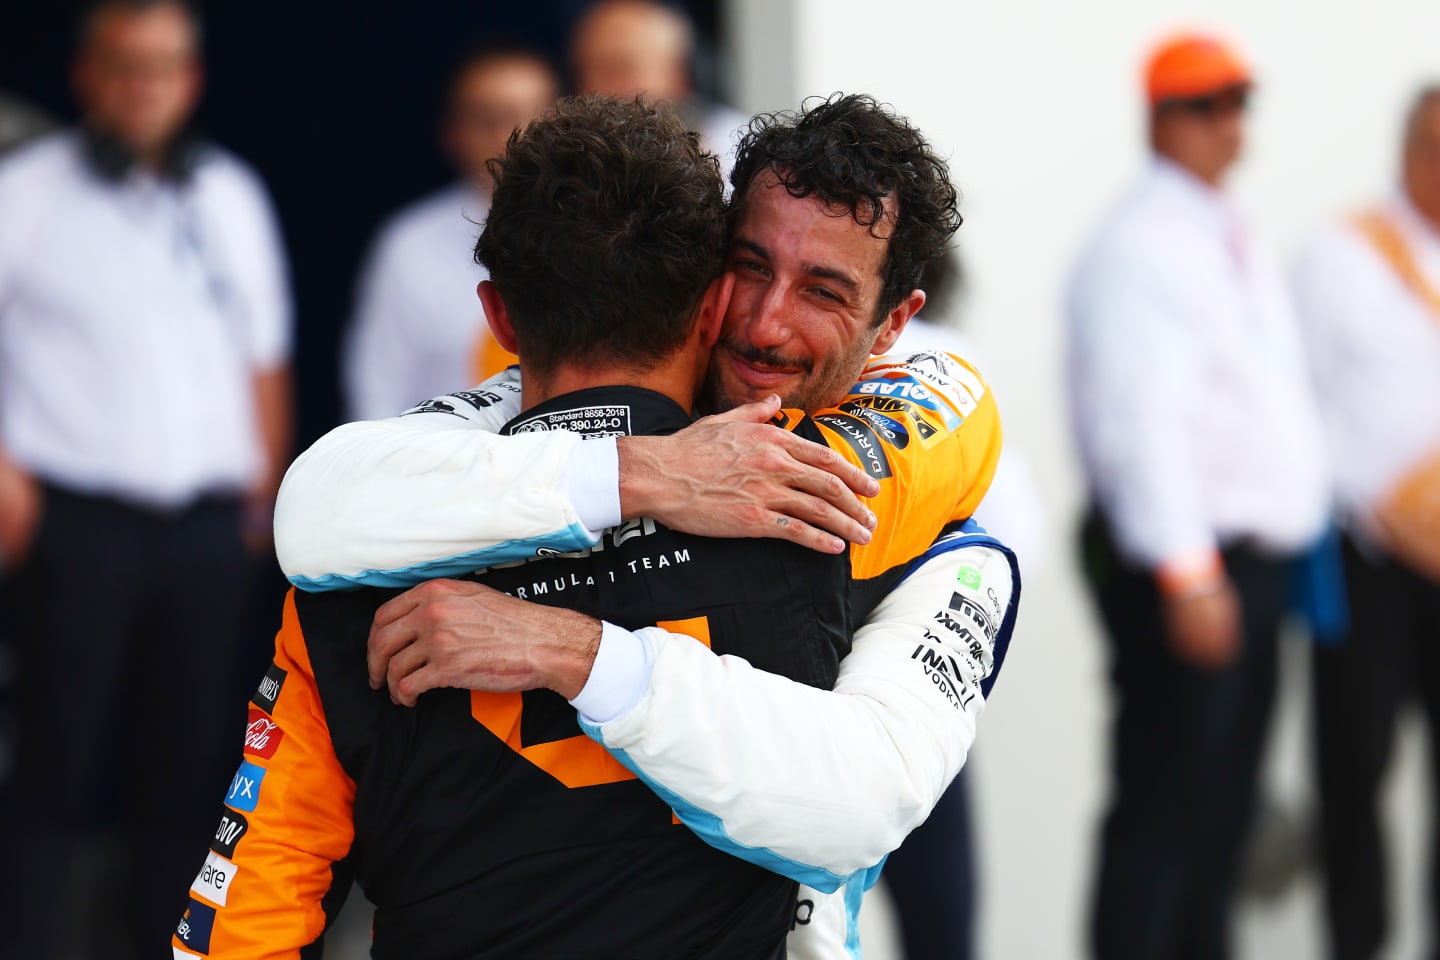 MIAMI, FLORIDA - MAY 05: Race winner Lando Norris of Great Britain and McLaren celebrates with